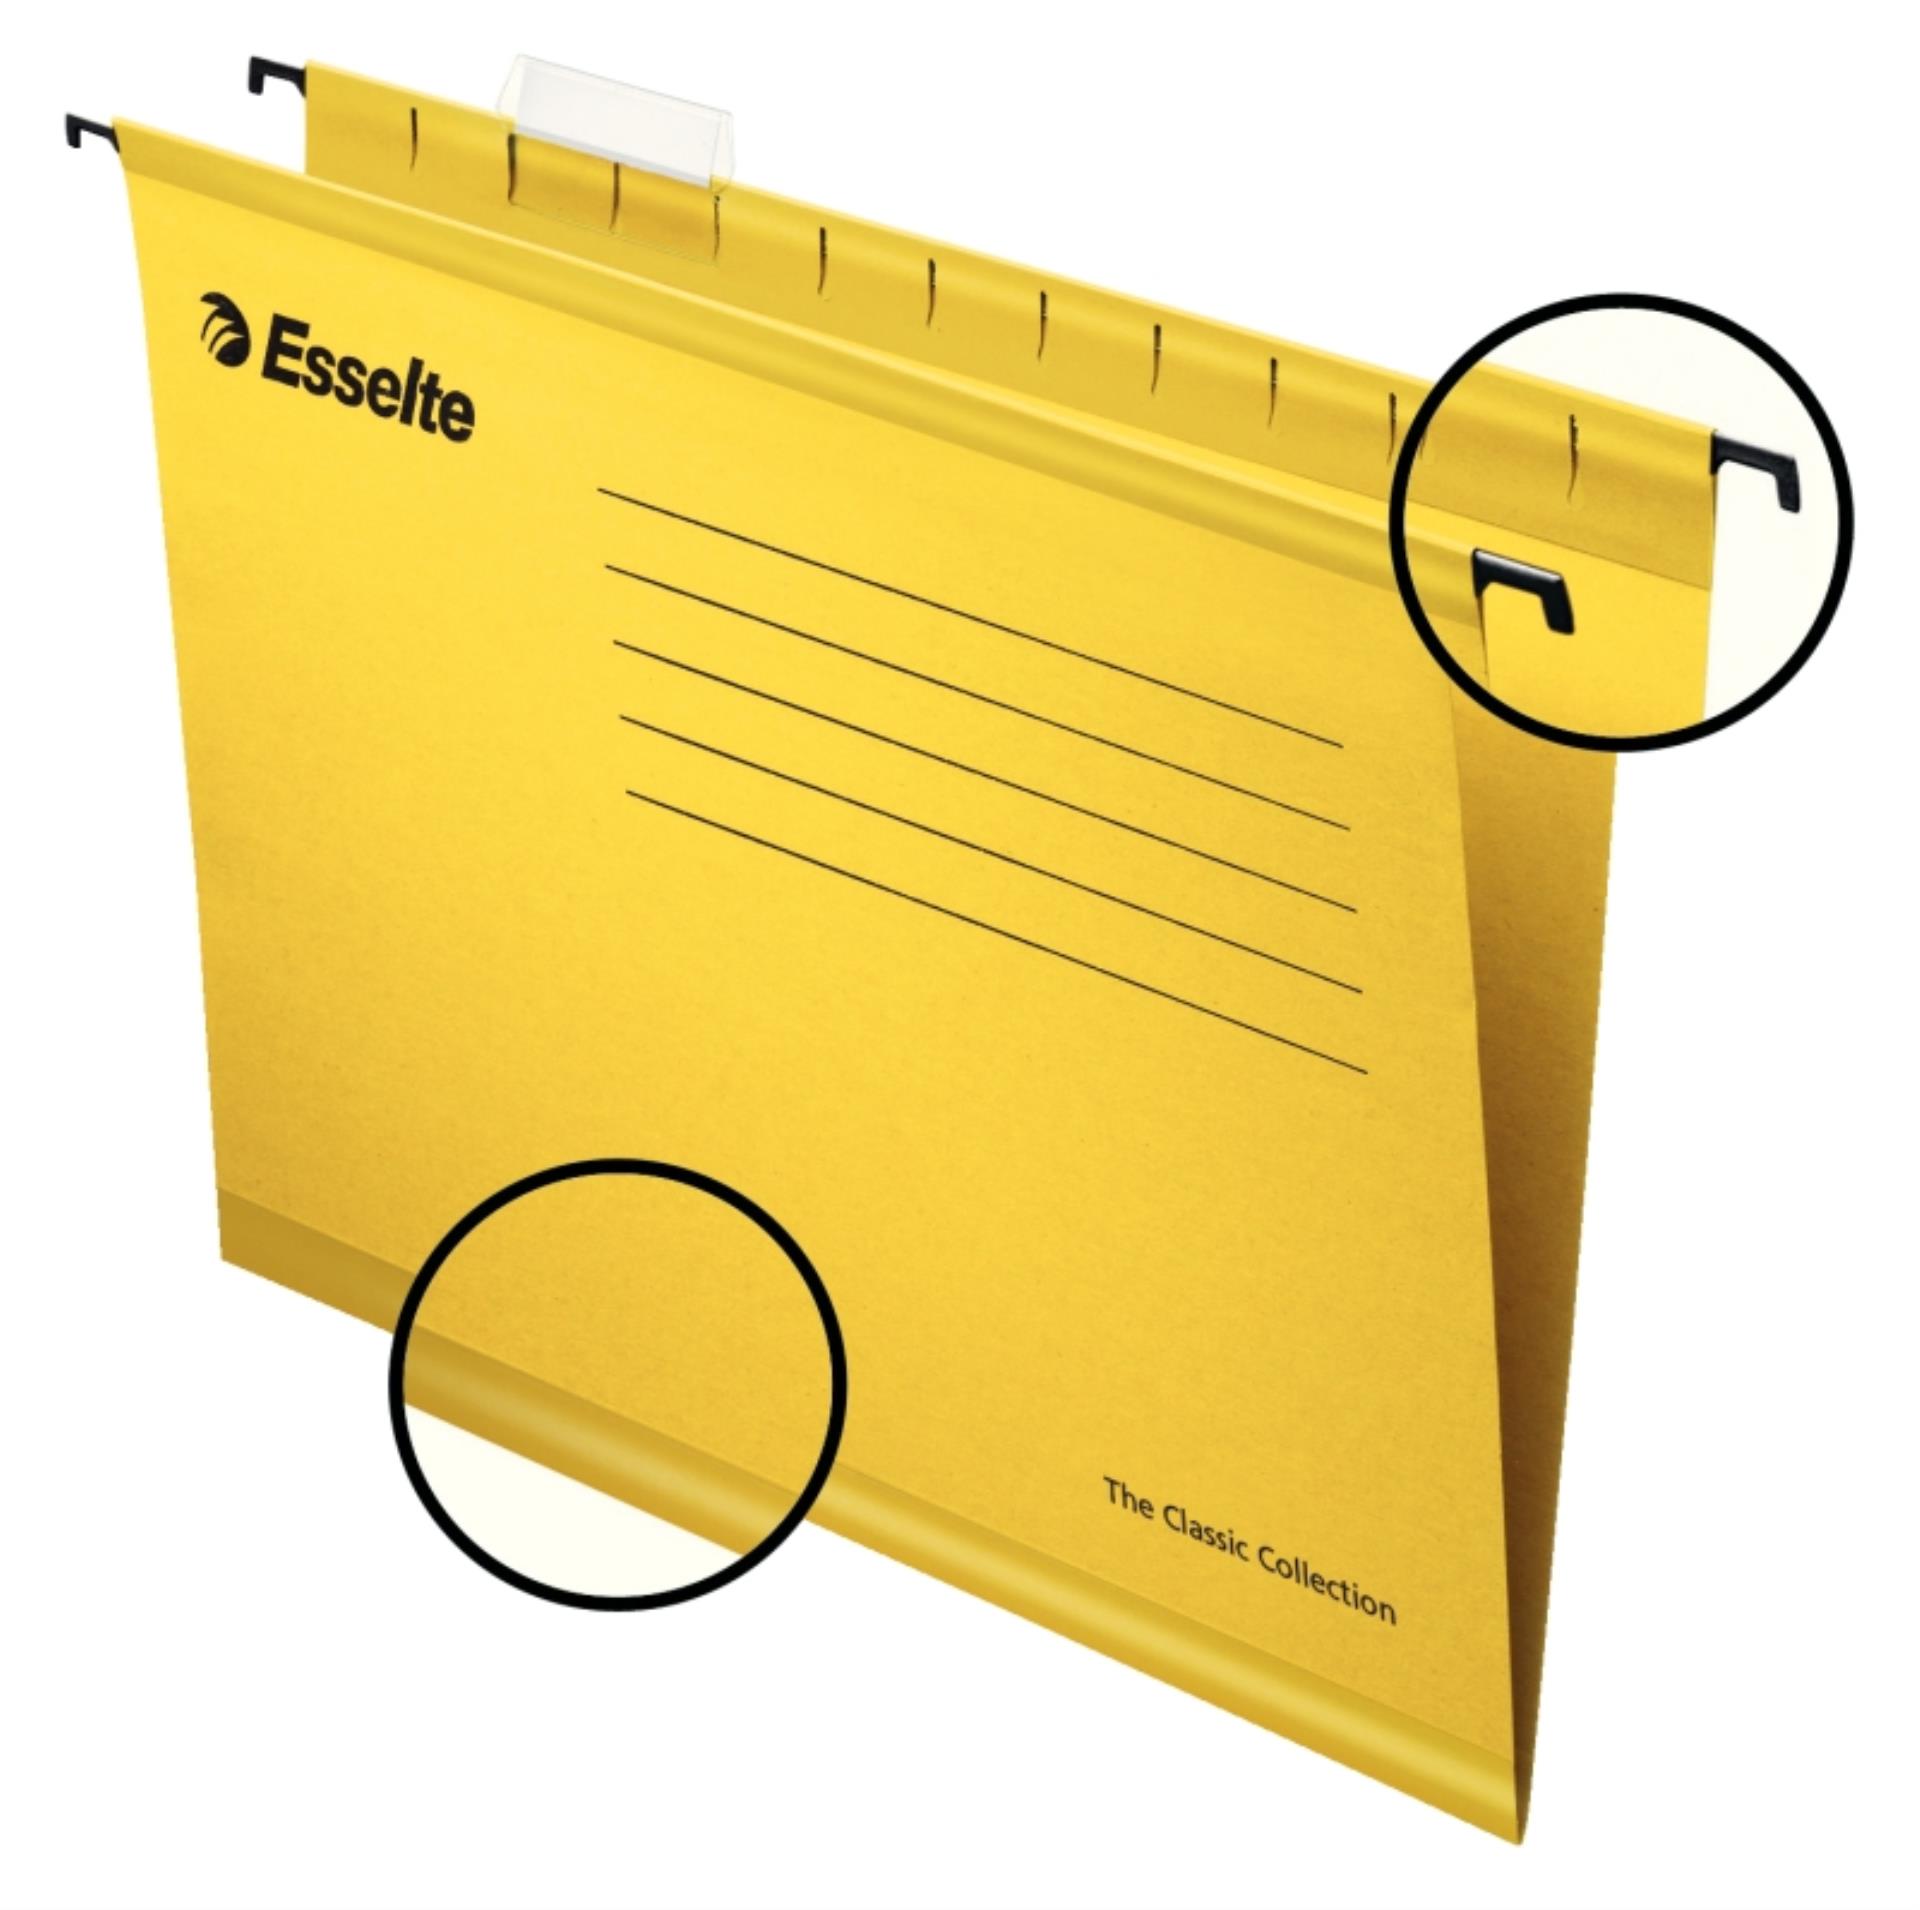 Esselte Papírové závěsné desky Pendaflex Standard, žluté, 25 ks